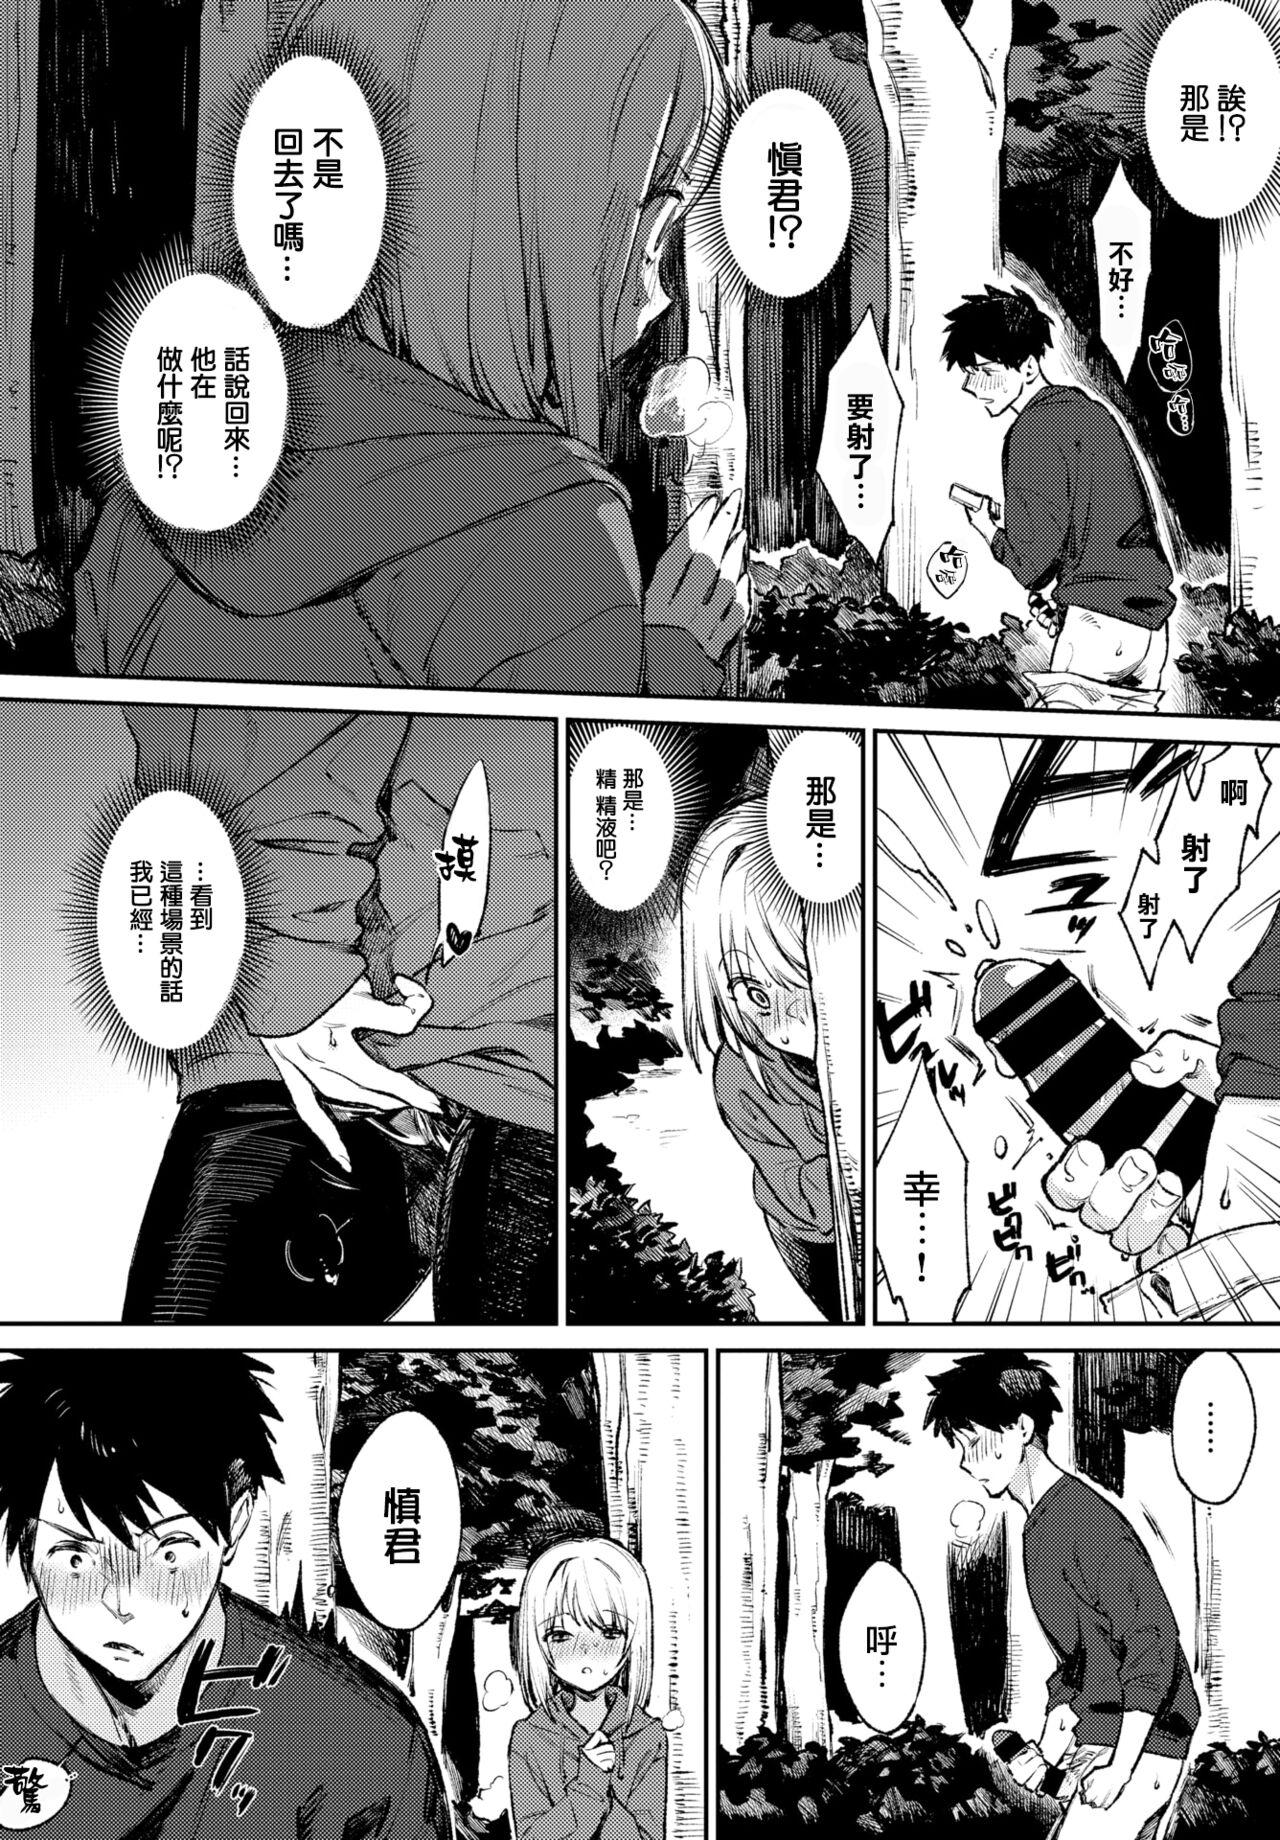 Blowing Yoru no naisho Close - Page 5